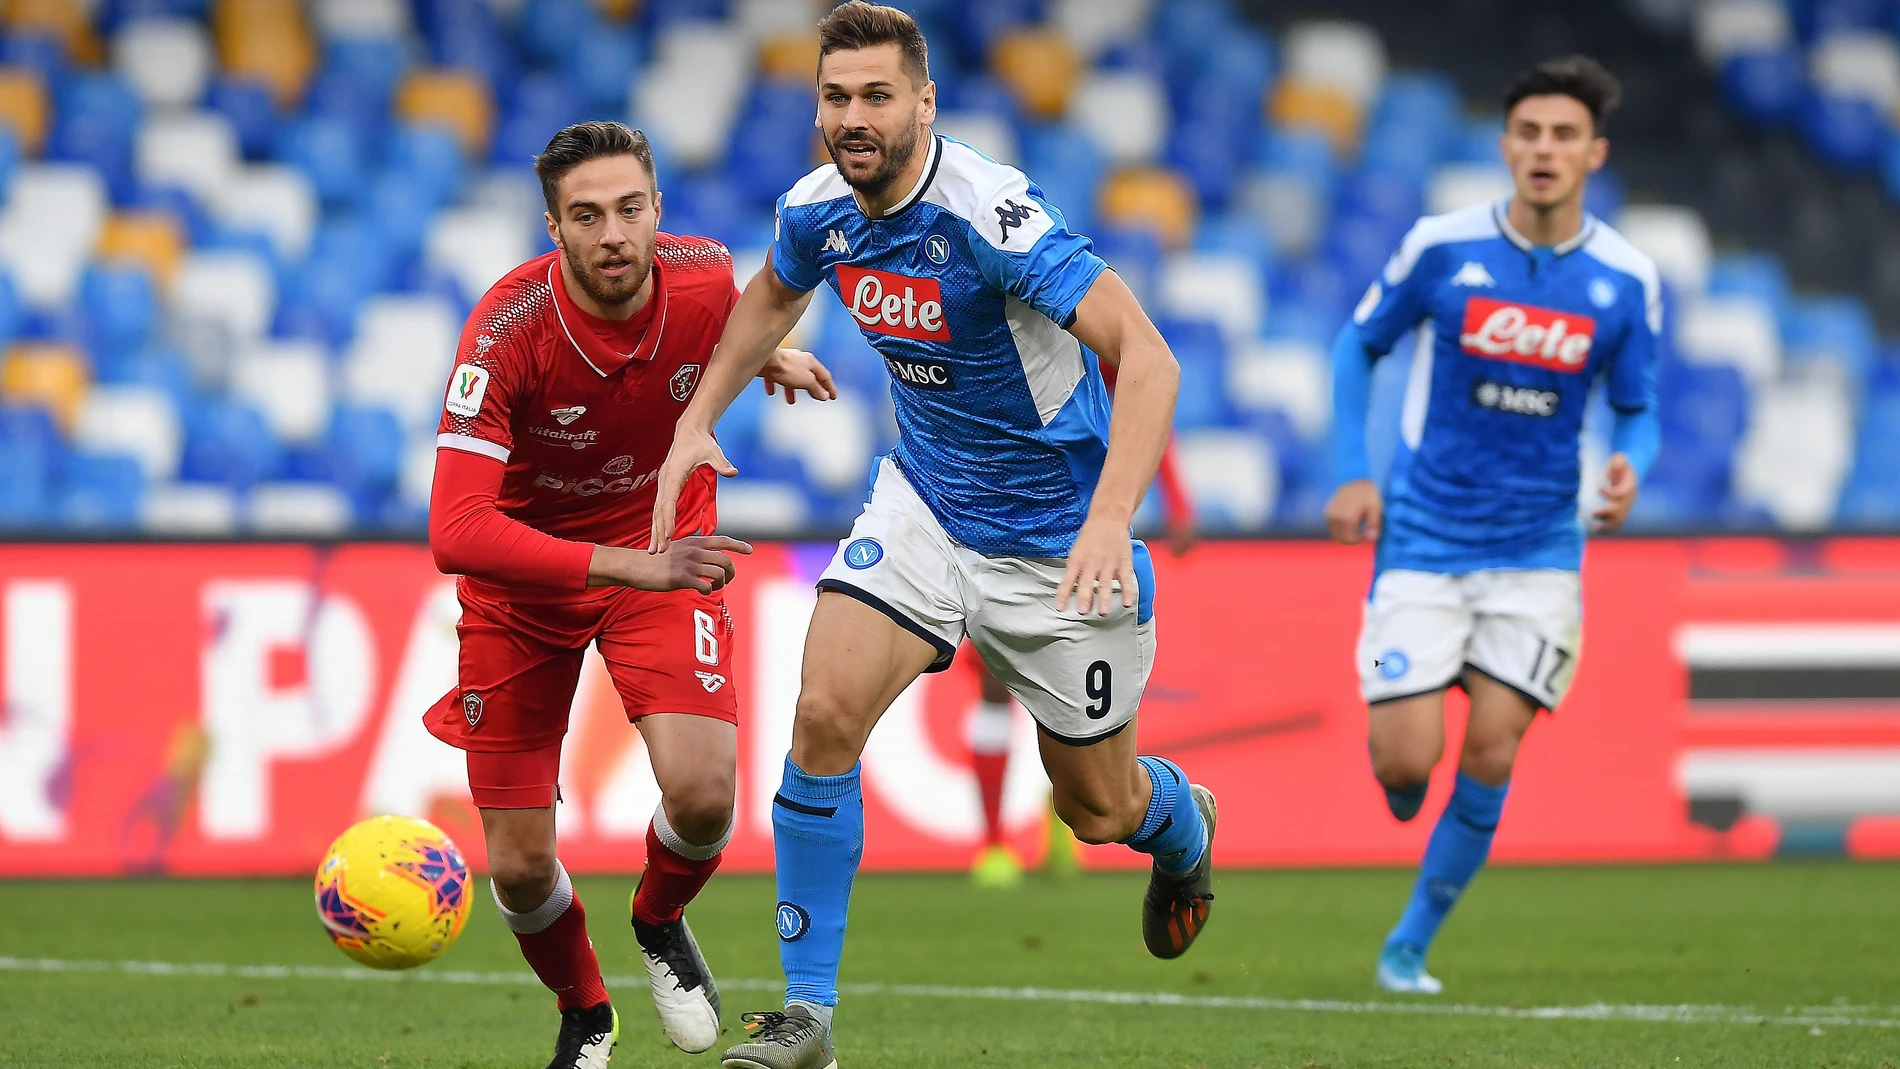 Italy cup - SSC Napoli vs AC Perugia